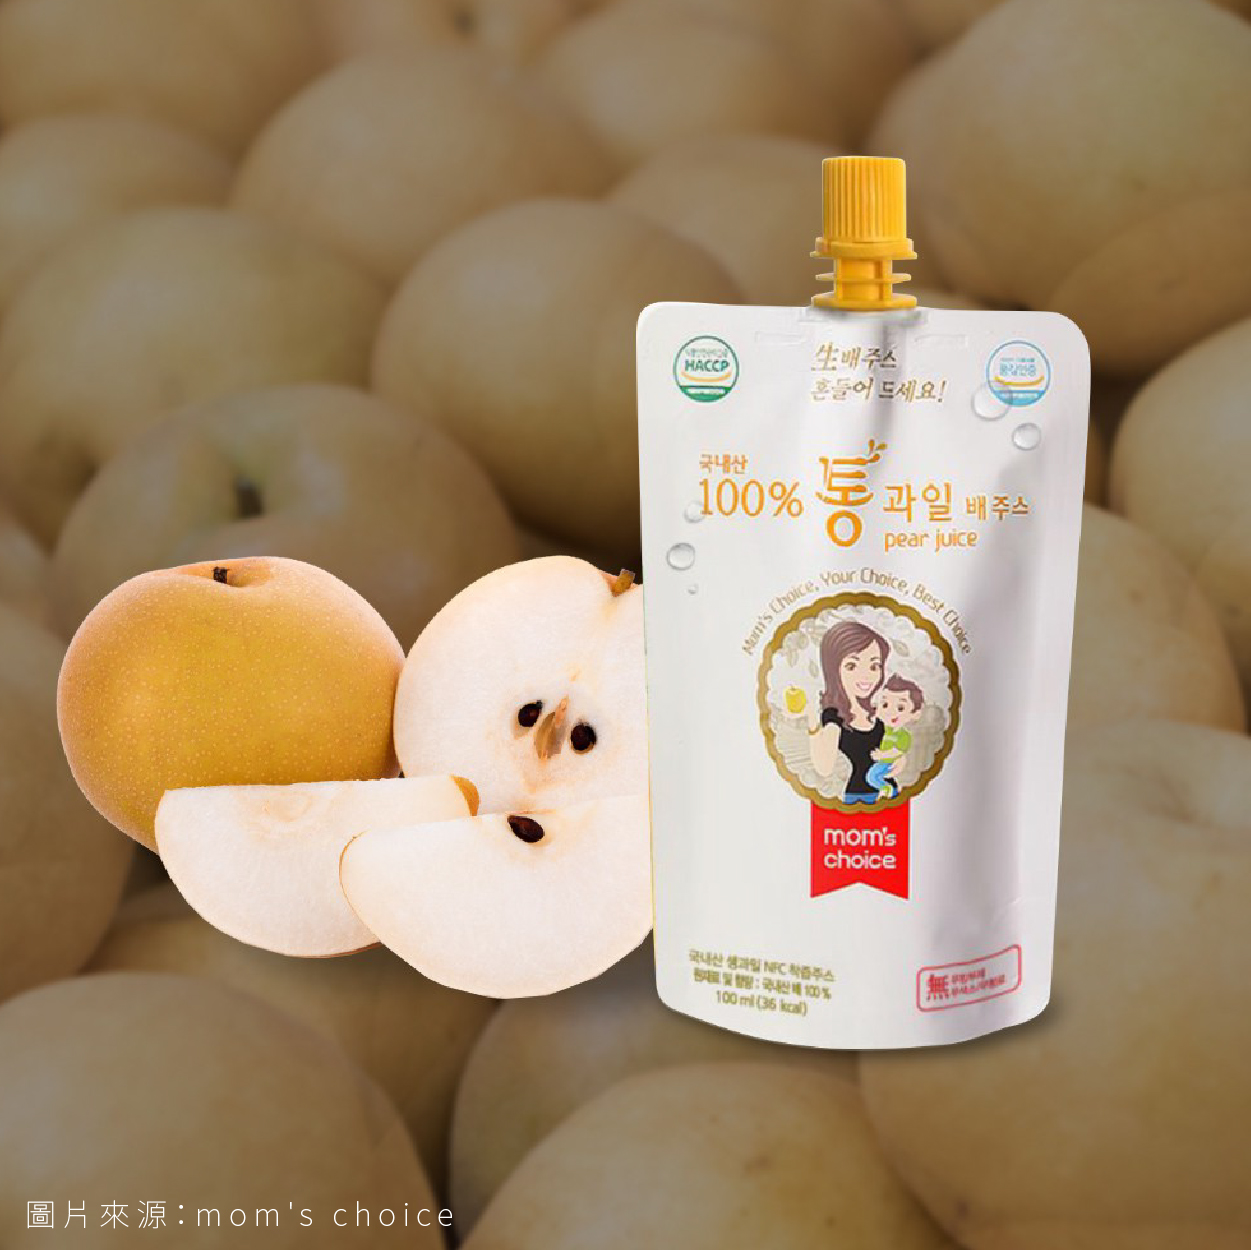 mom's choice  水梨汁  100%韓國水梨純果汁  天然無添加的自然甜